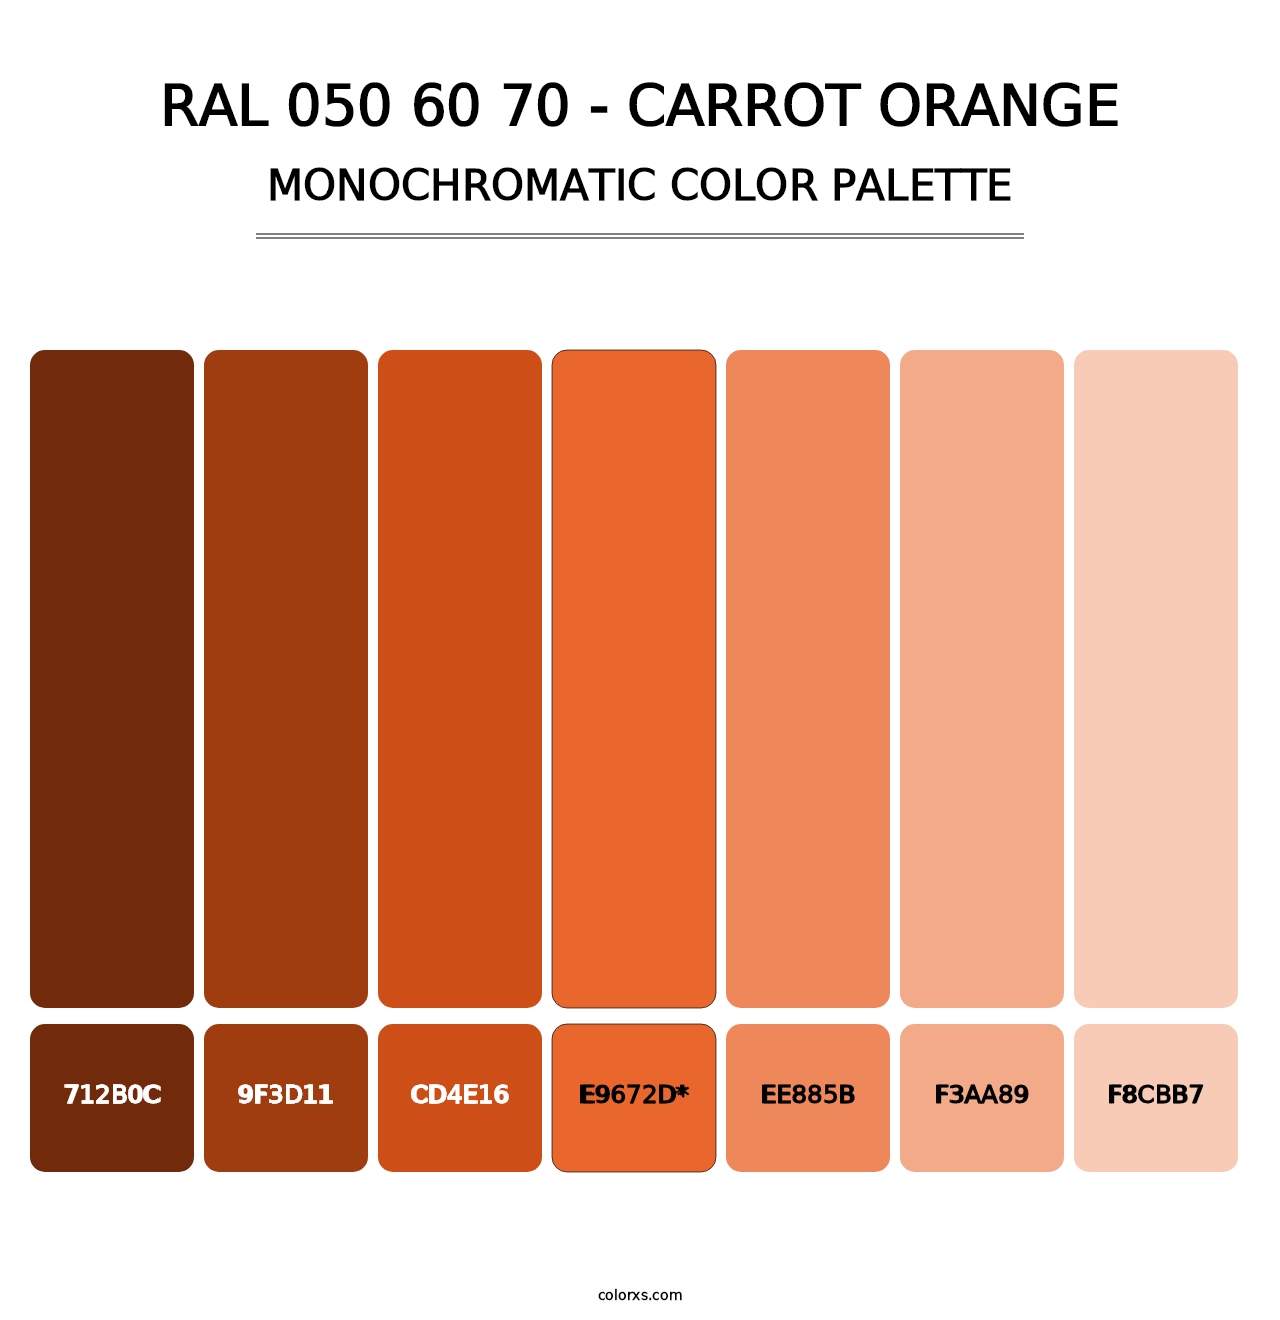 RAL 050 60 70 - Carrot Orange - Monochromatic Color Palette